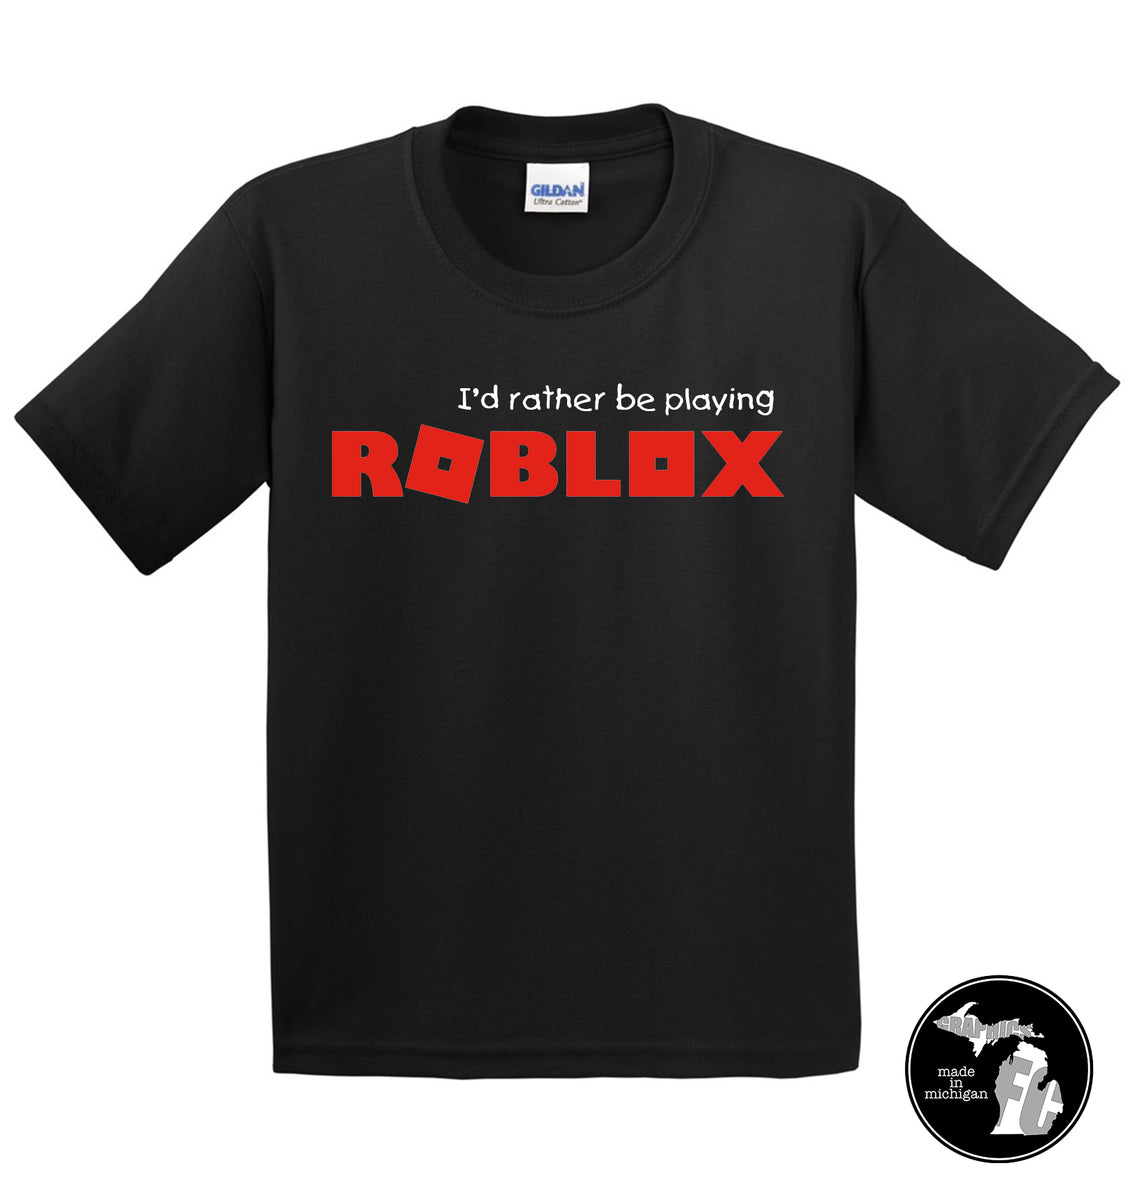 Blue t-shirt  Free t shirt design, Roblox t shirts, Roblox shirt